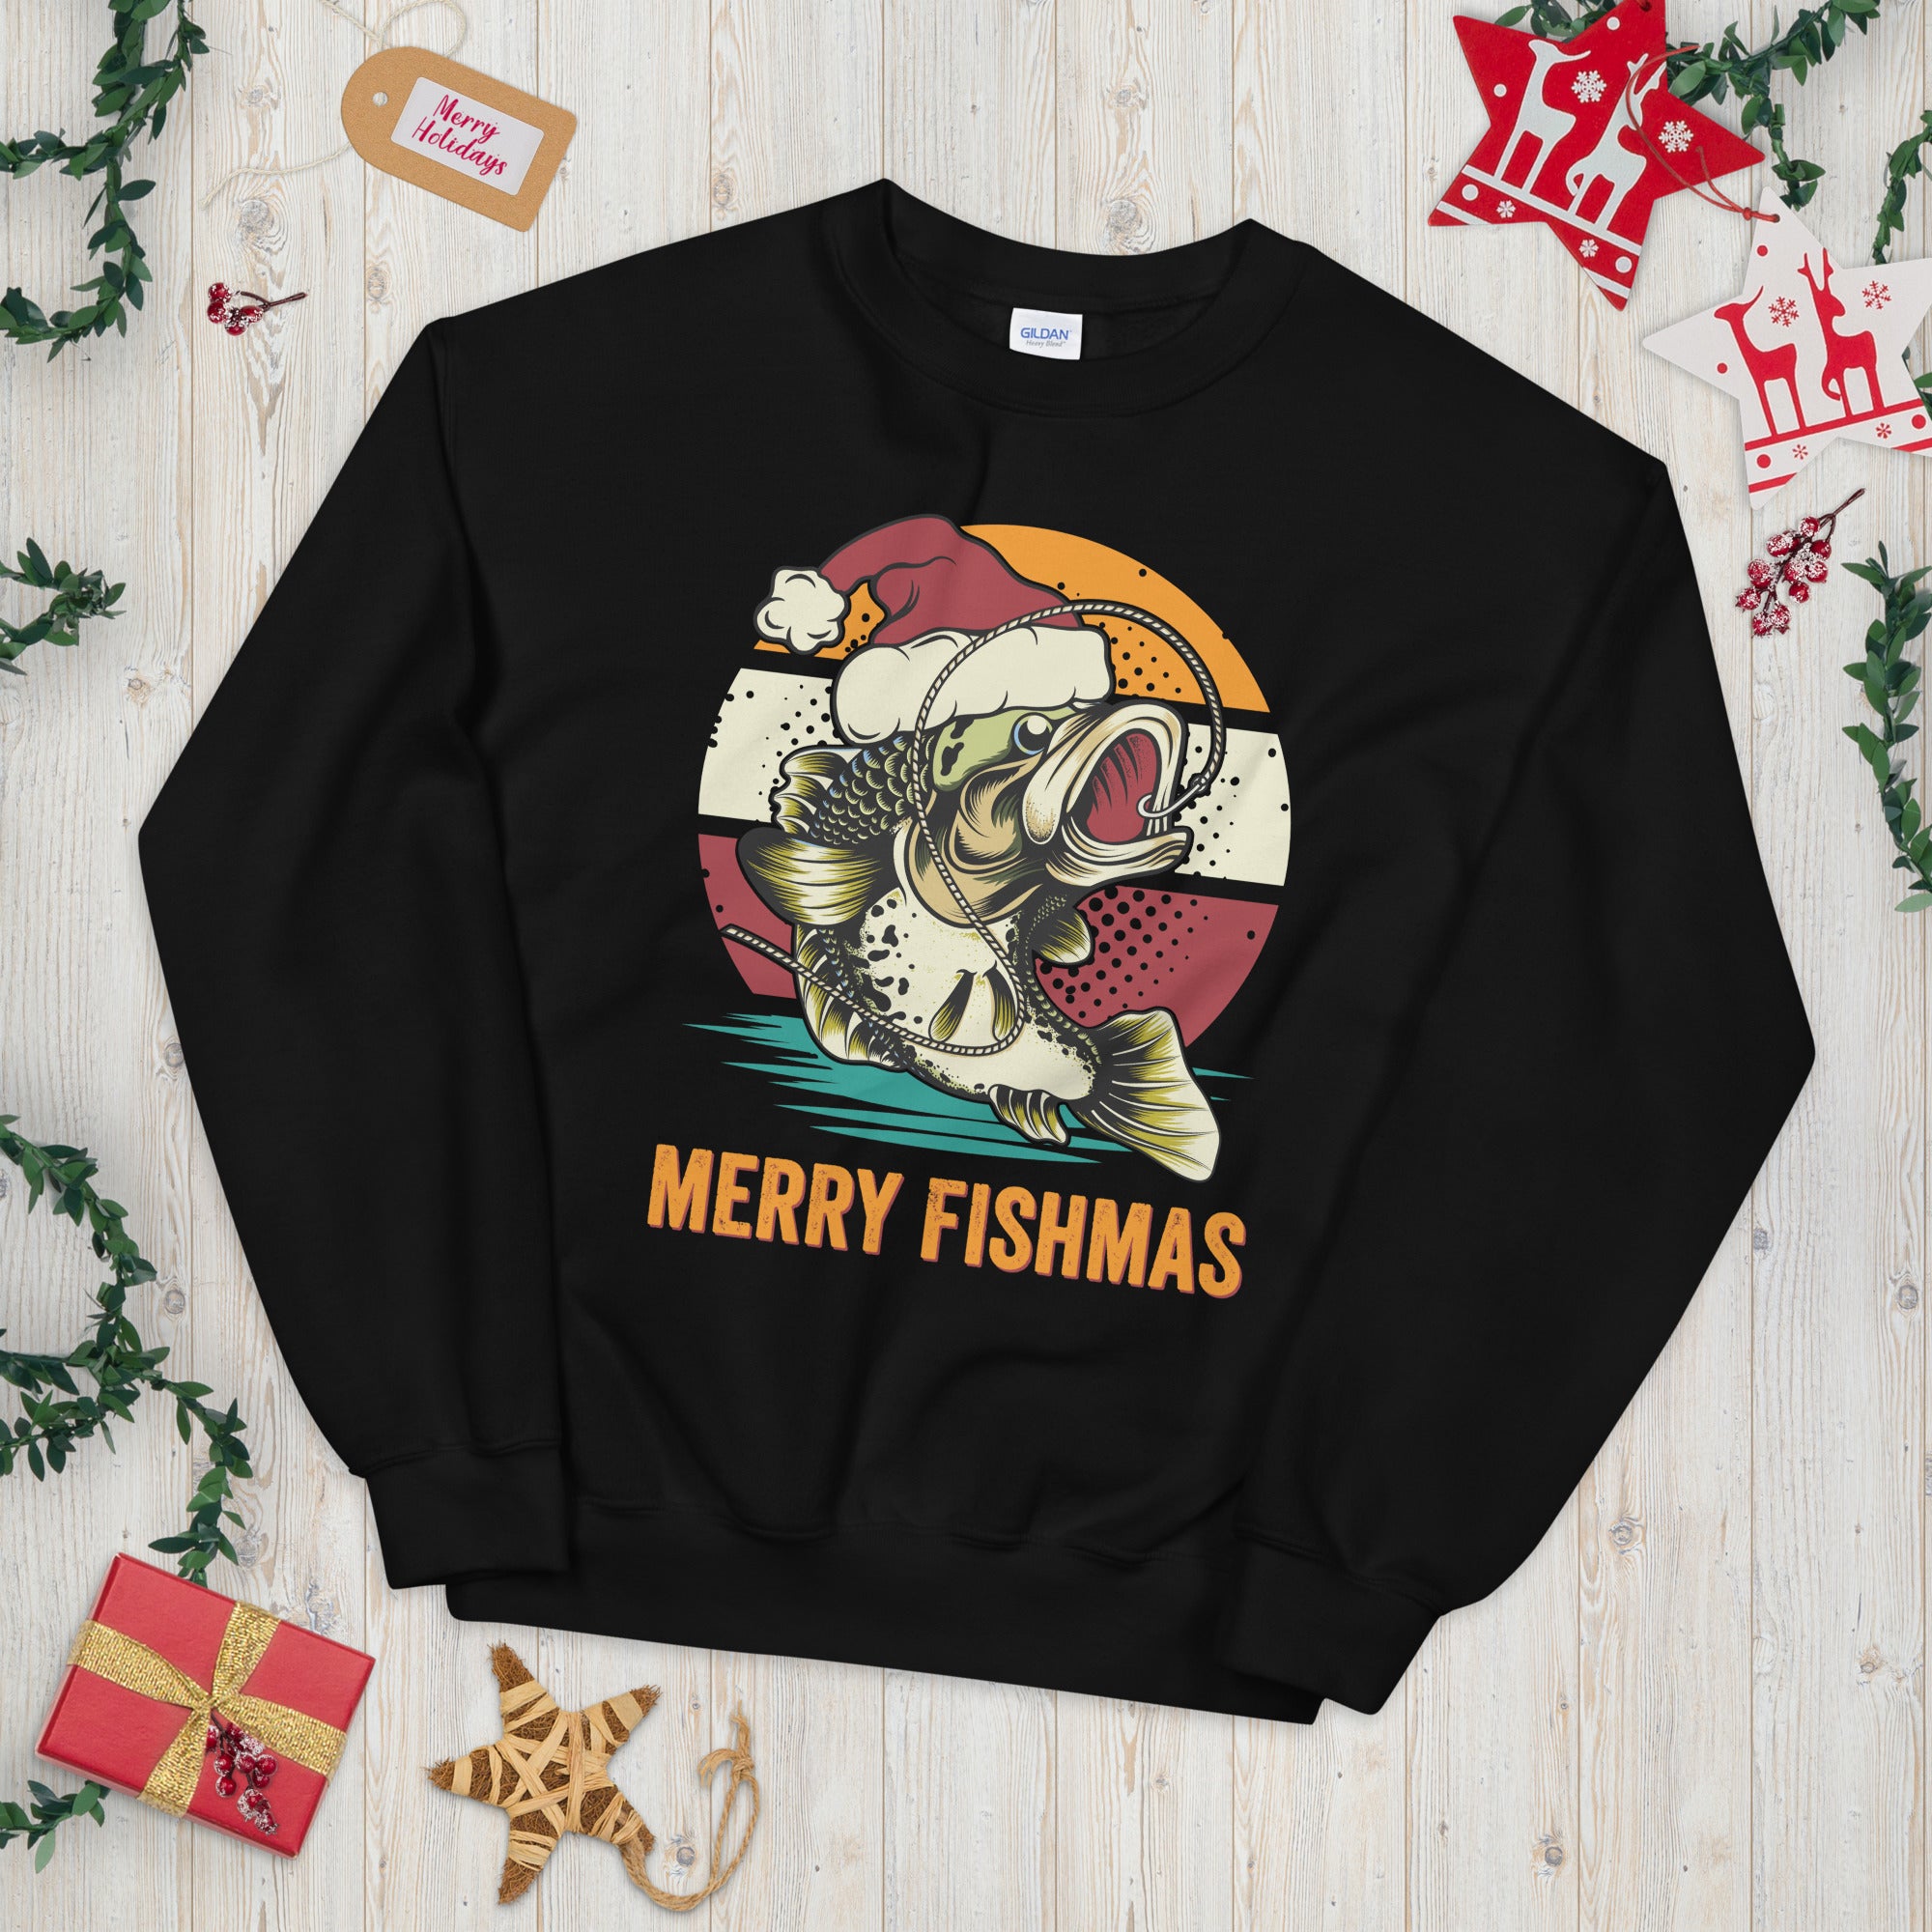 Merry Fishmas Sweater, Christmas Fishing Sweatshirt, Bass Fishing Lover Gift, Angler Gifts, Bass Fishing Shirt, Christmas Gift for Fisherman